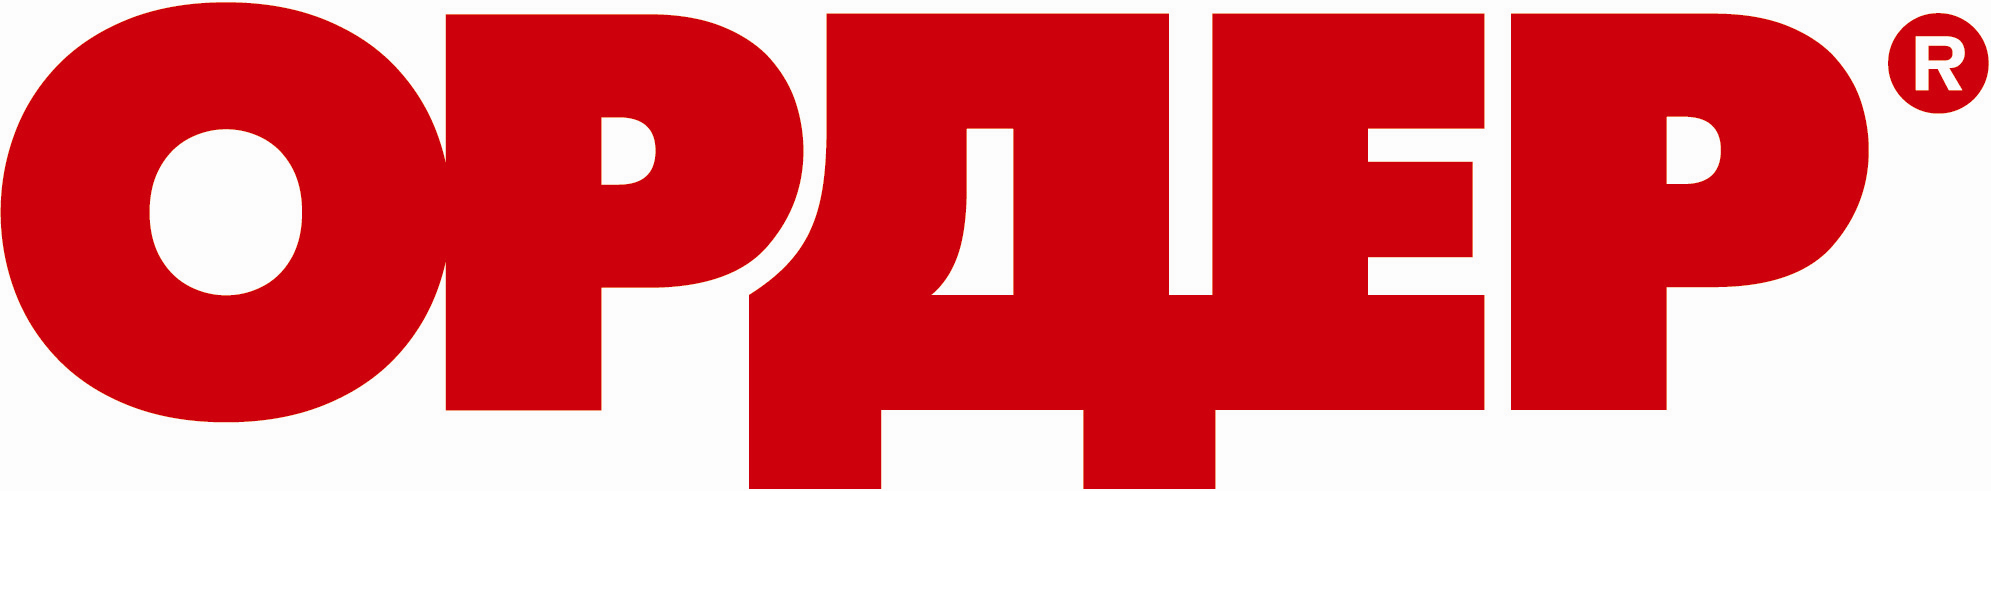 Ордер магазин. Ордер лого. Магазин ордер в Нижнем Новгороде. Ордер логотип магазин.